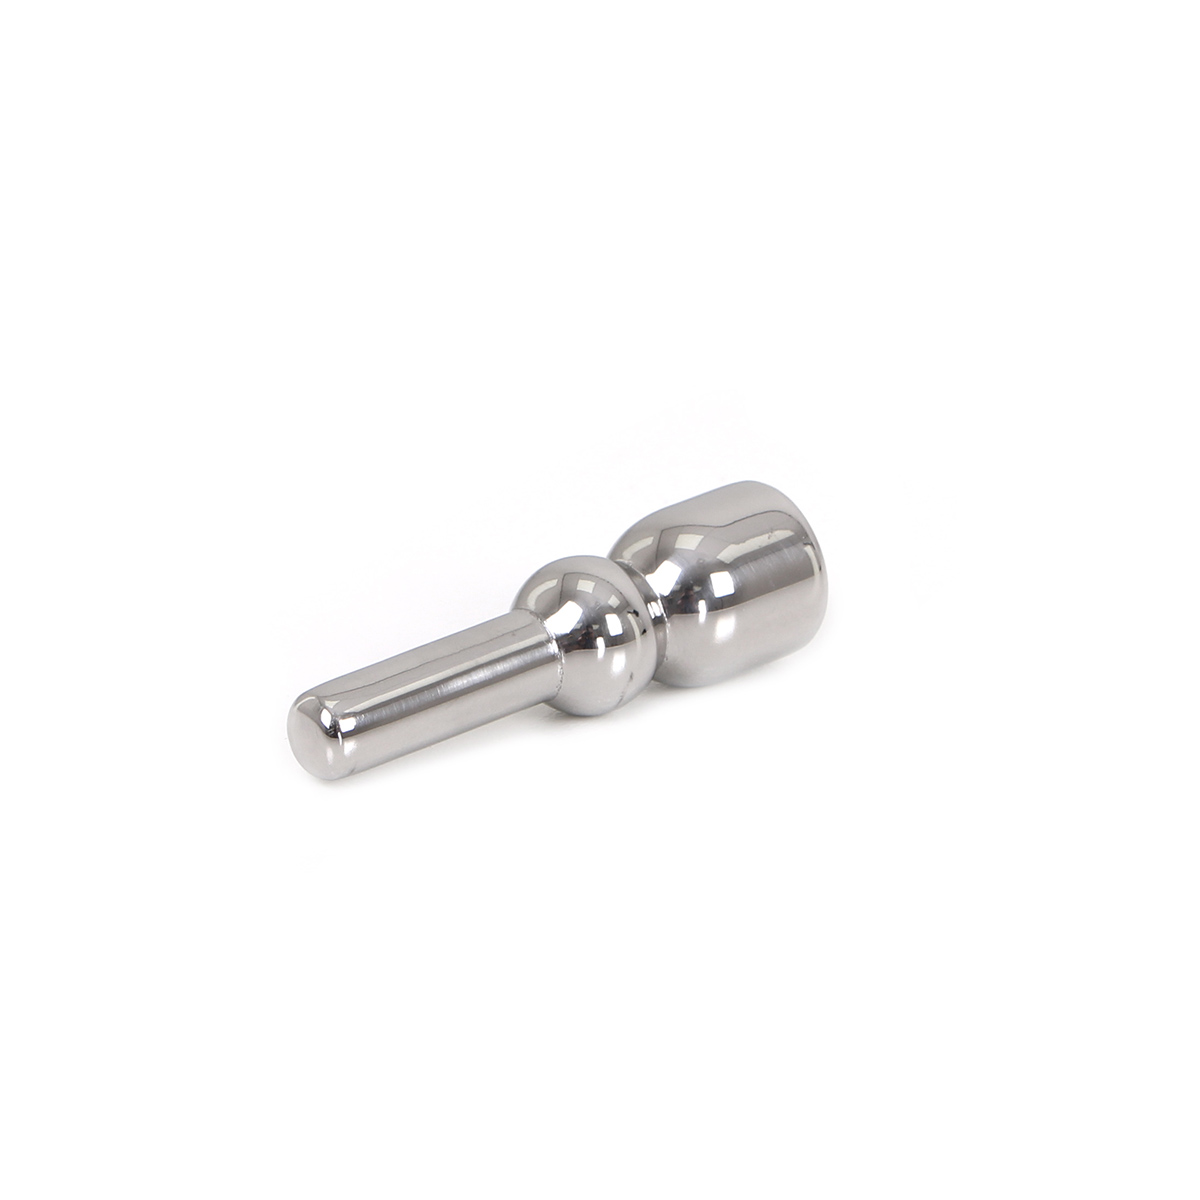 The-Bead-Mini-with-Jewel-Plug-OPR-2960089-1